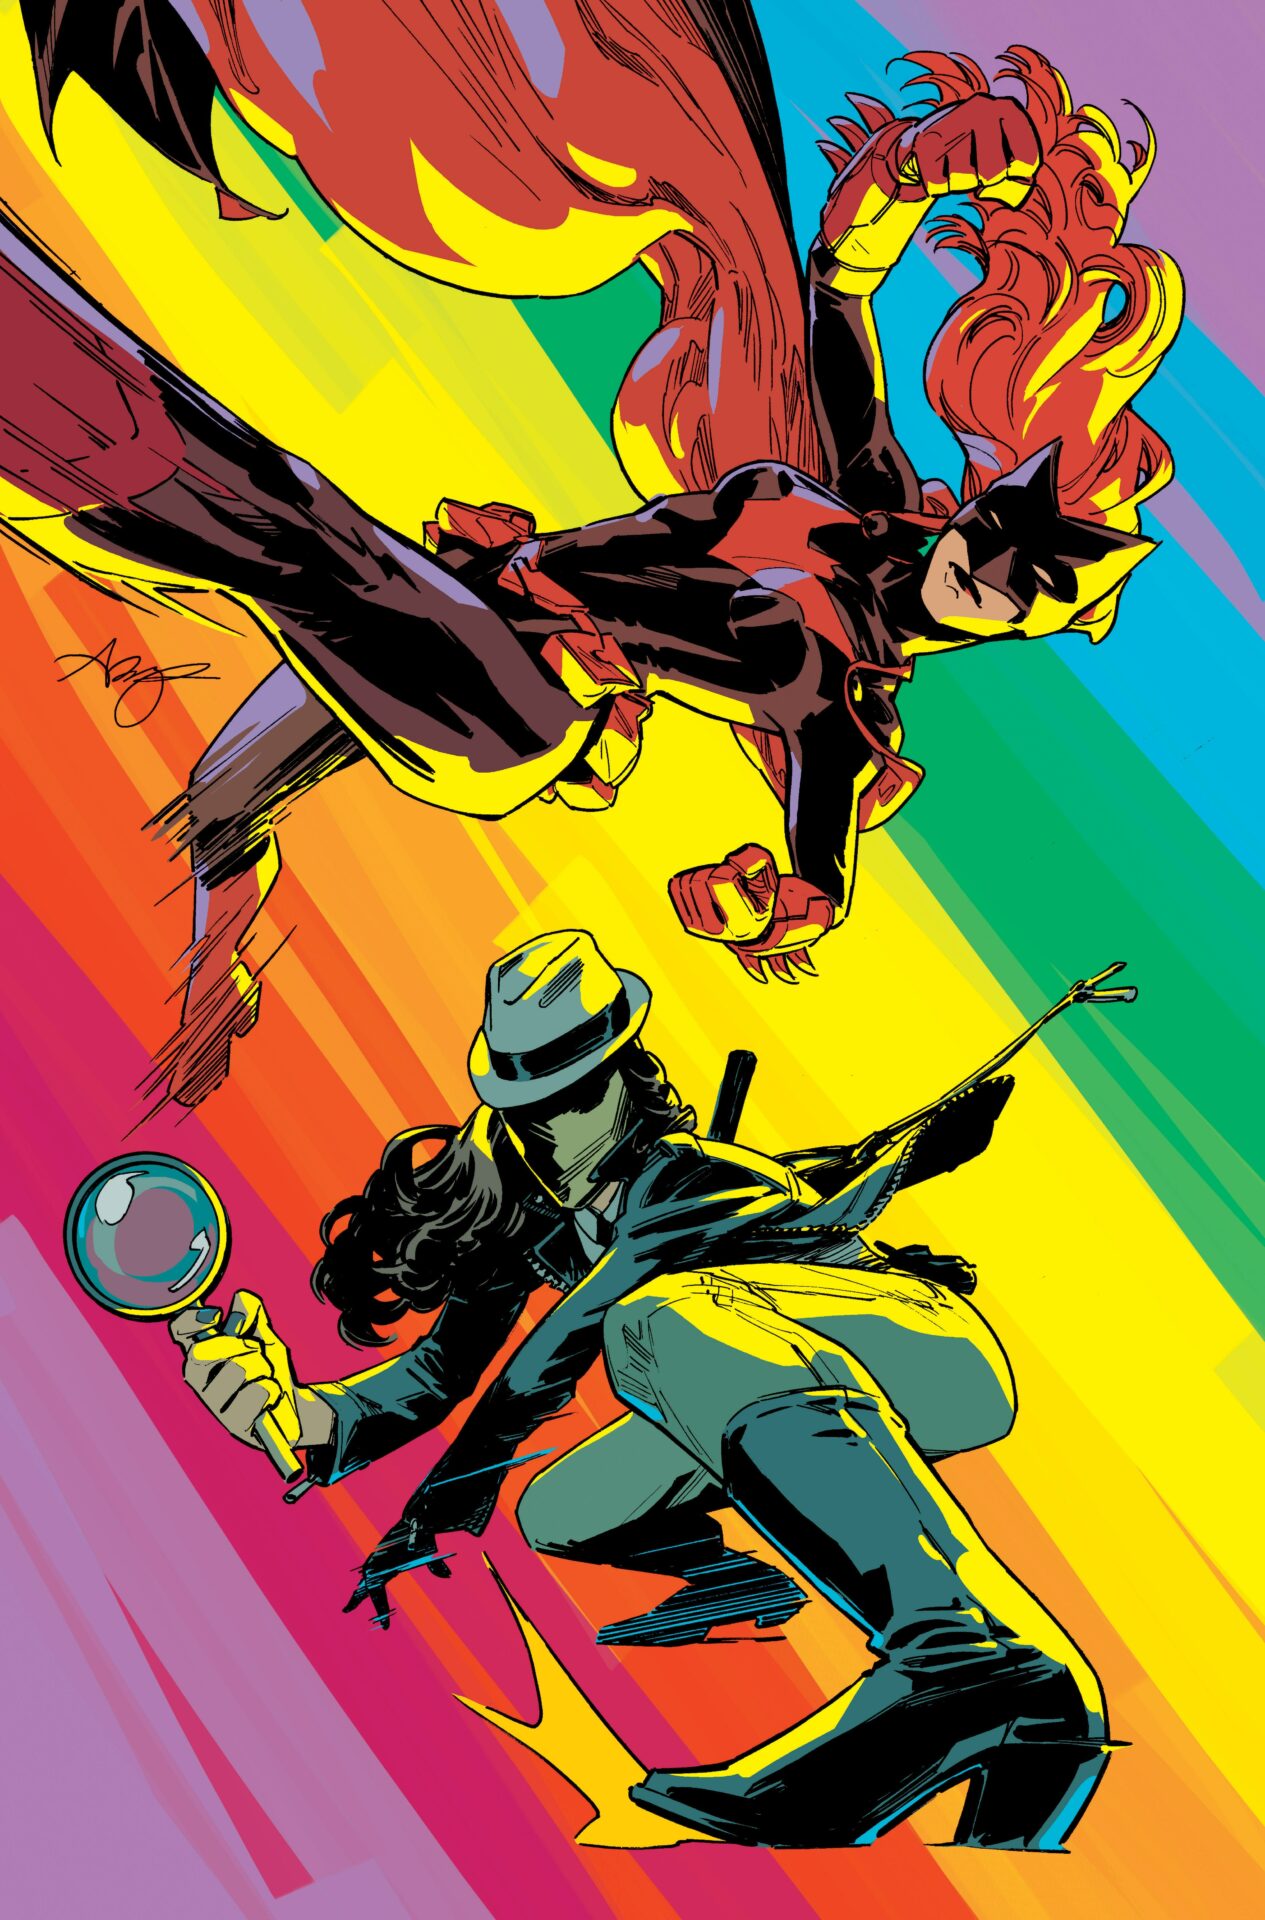 Pride cover for Detective Comics #1073